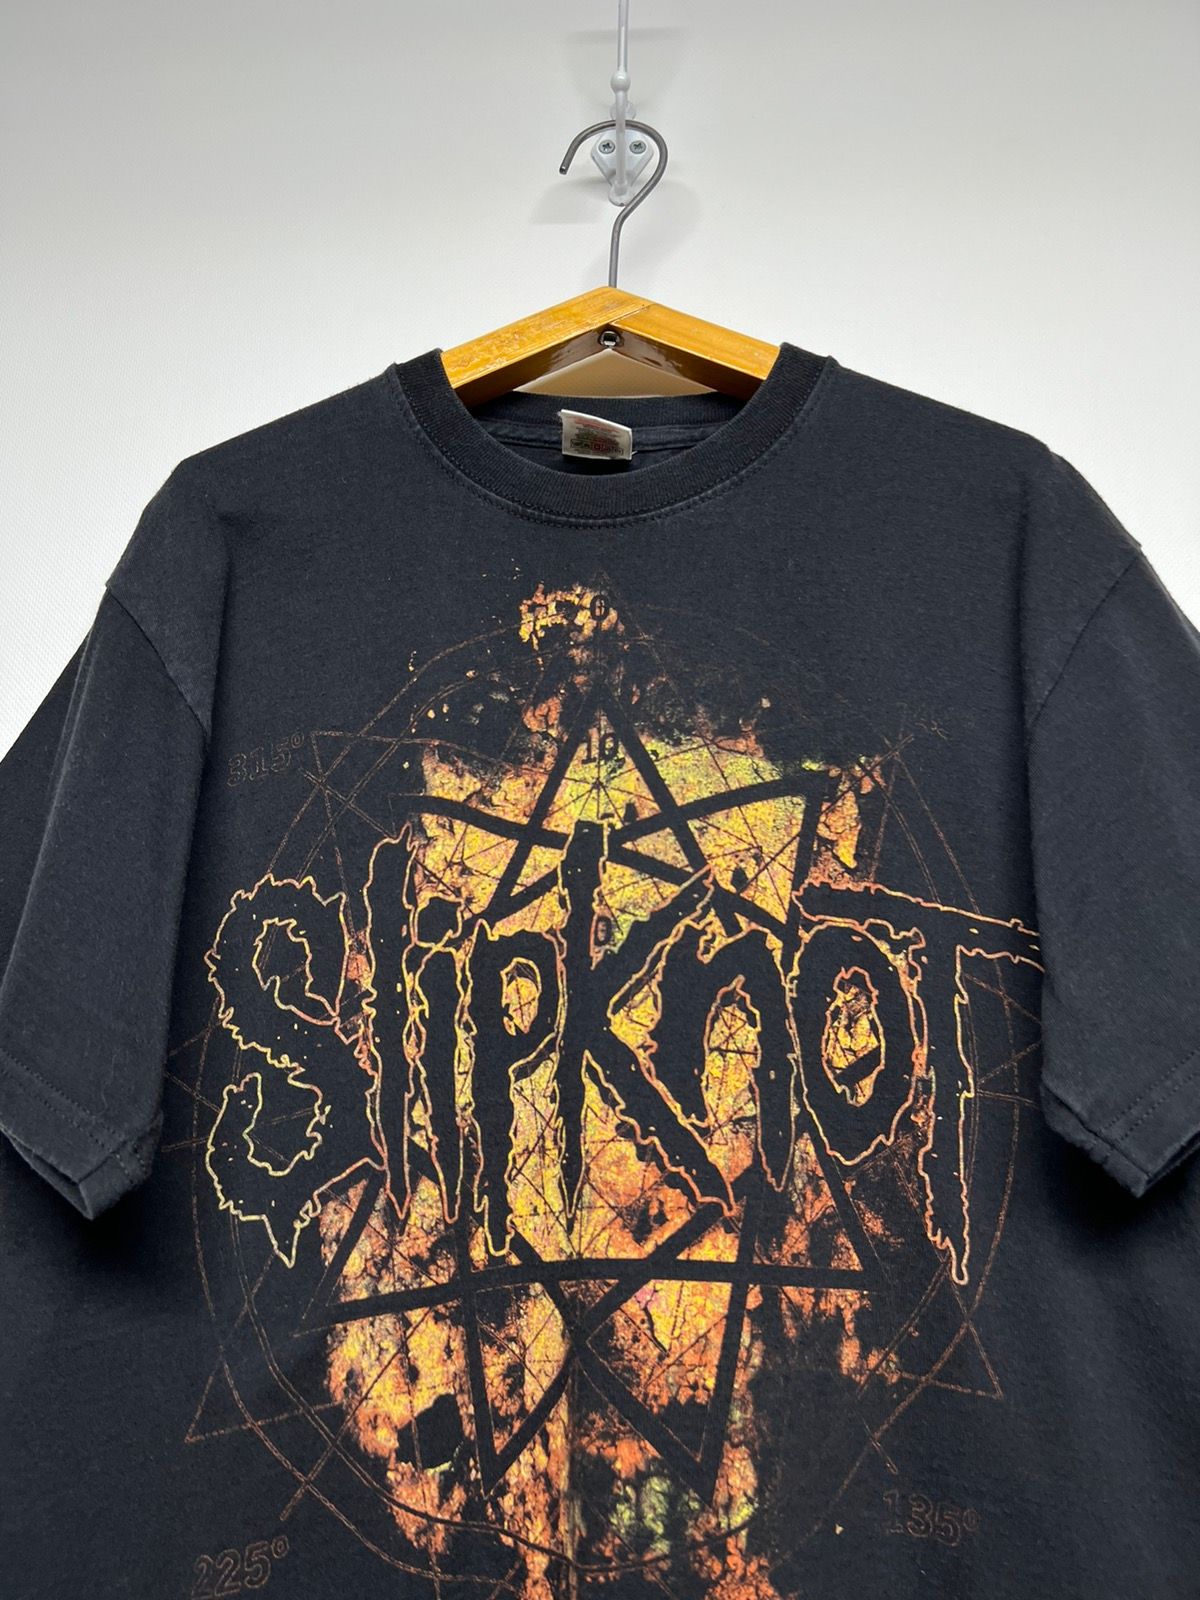 Vintage Vintage 2009 Slipknot All Hope Is Gone Tour T-Shirt Size US M / EU 48-50 / 2 - 4 Thumbnail